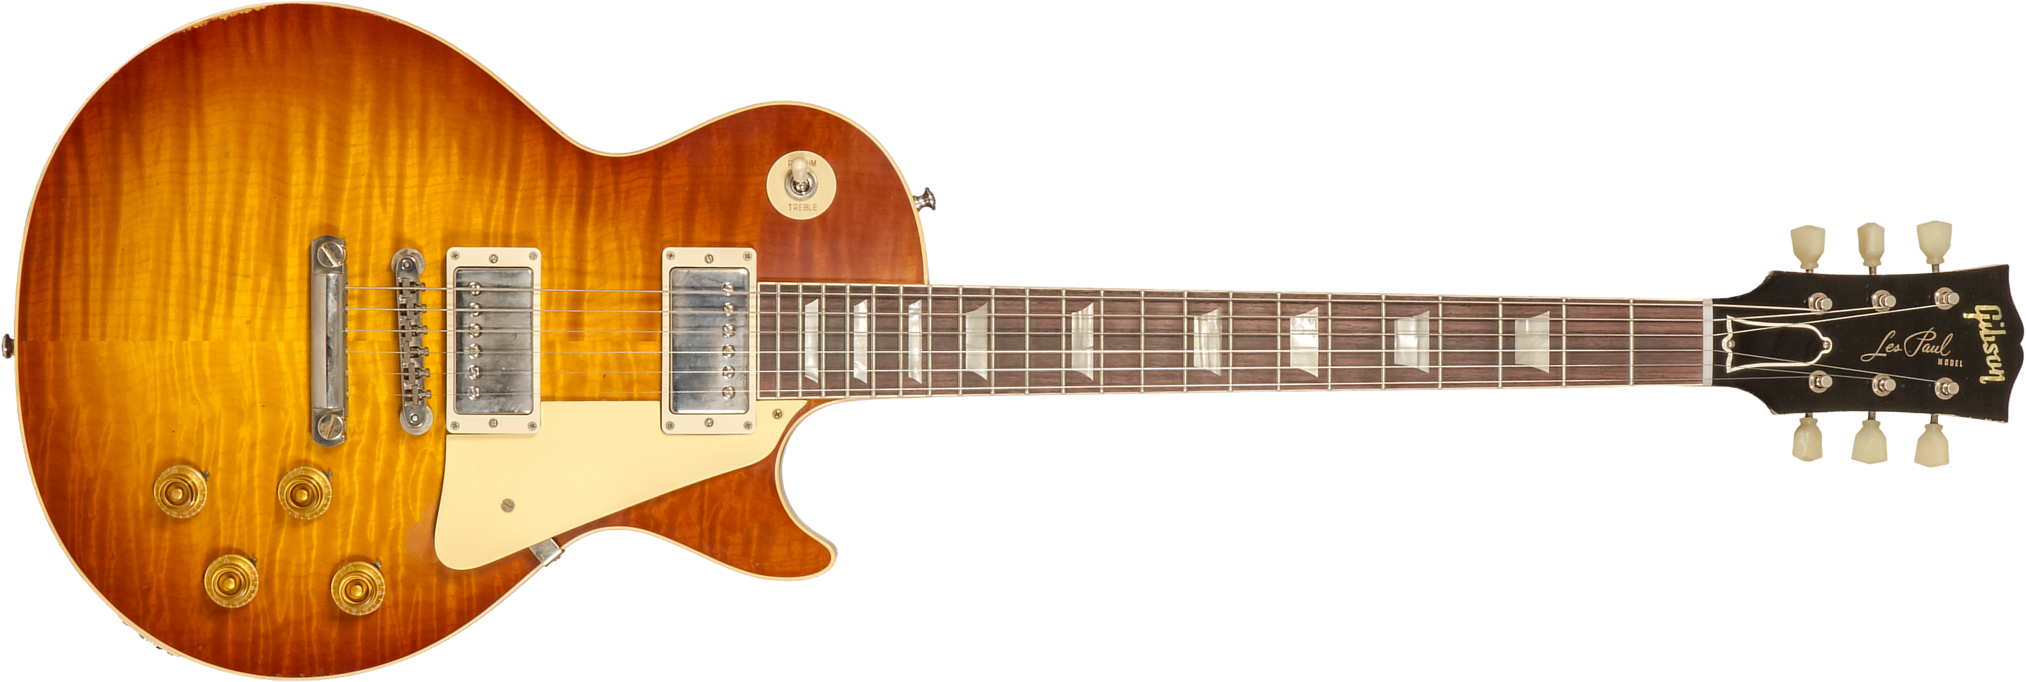 Gibson Custom Shop M2m Les Paul Standard 1959 Reissue 2h Ht Rw #94327 - Murphy Lab Light Aged Ice Tea Burst - Enkel gesneden elektrische gitaar - Main